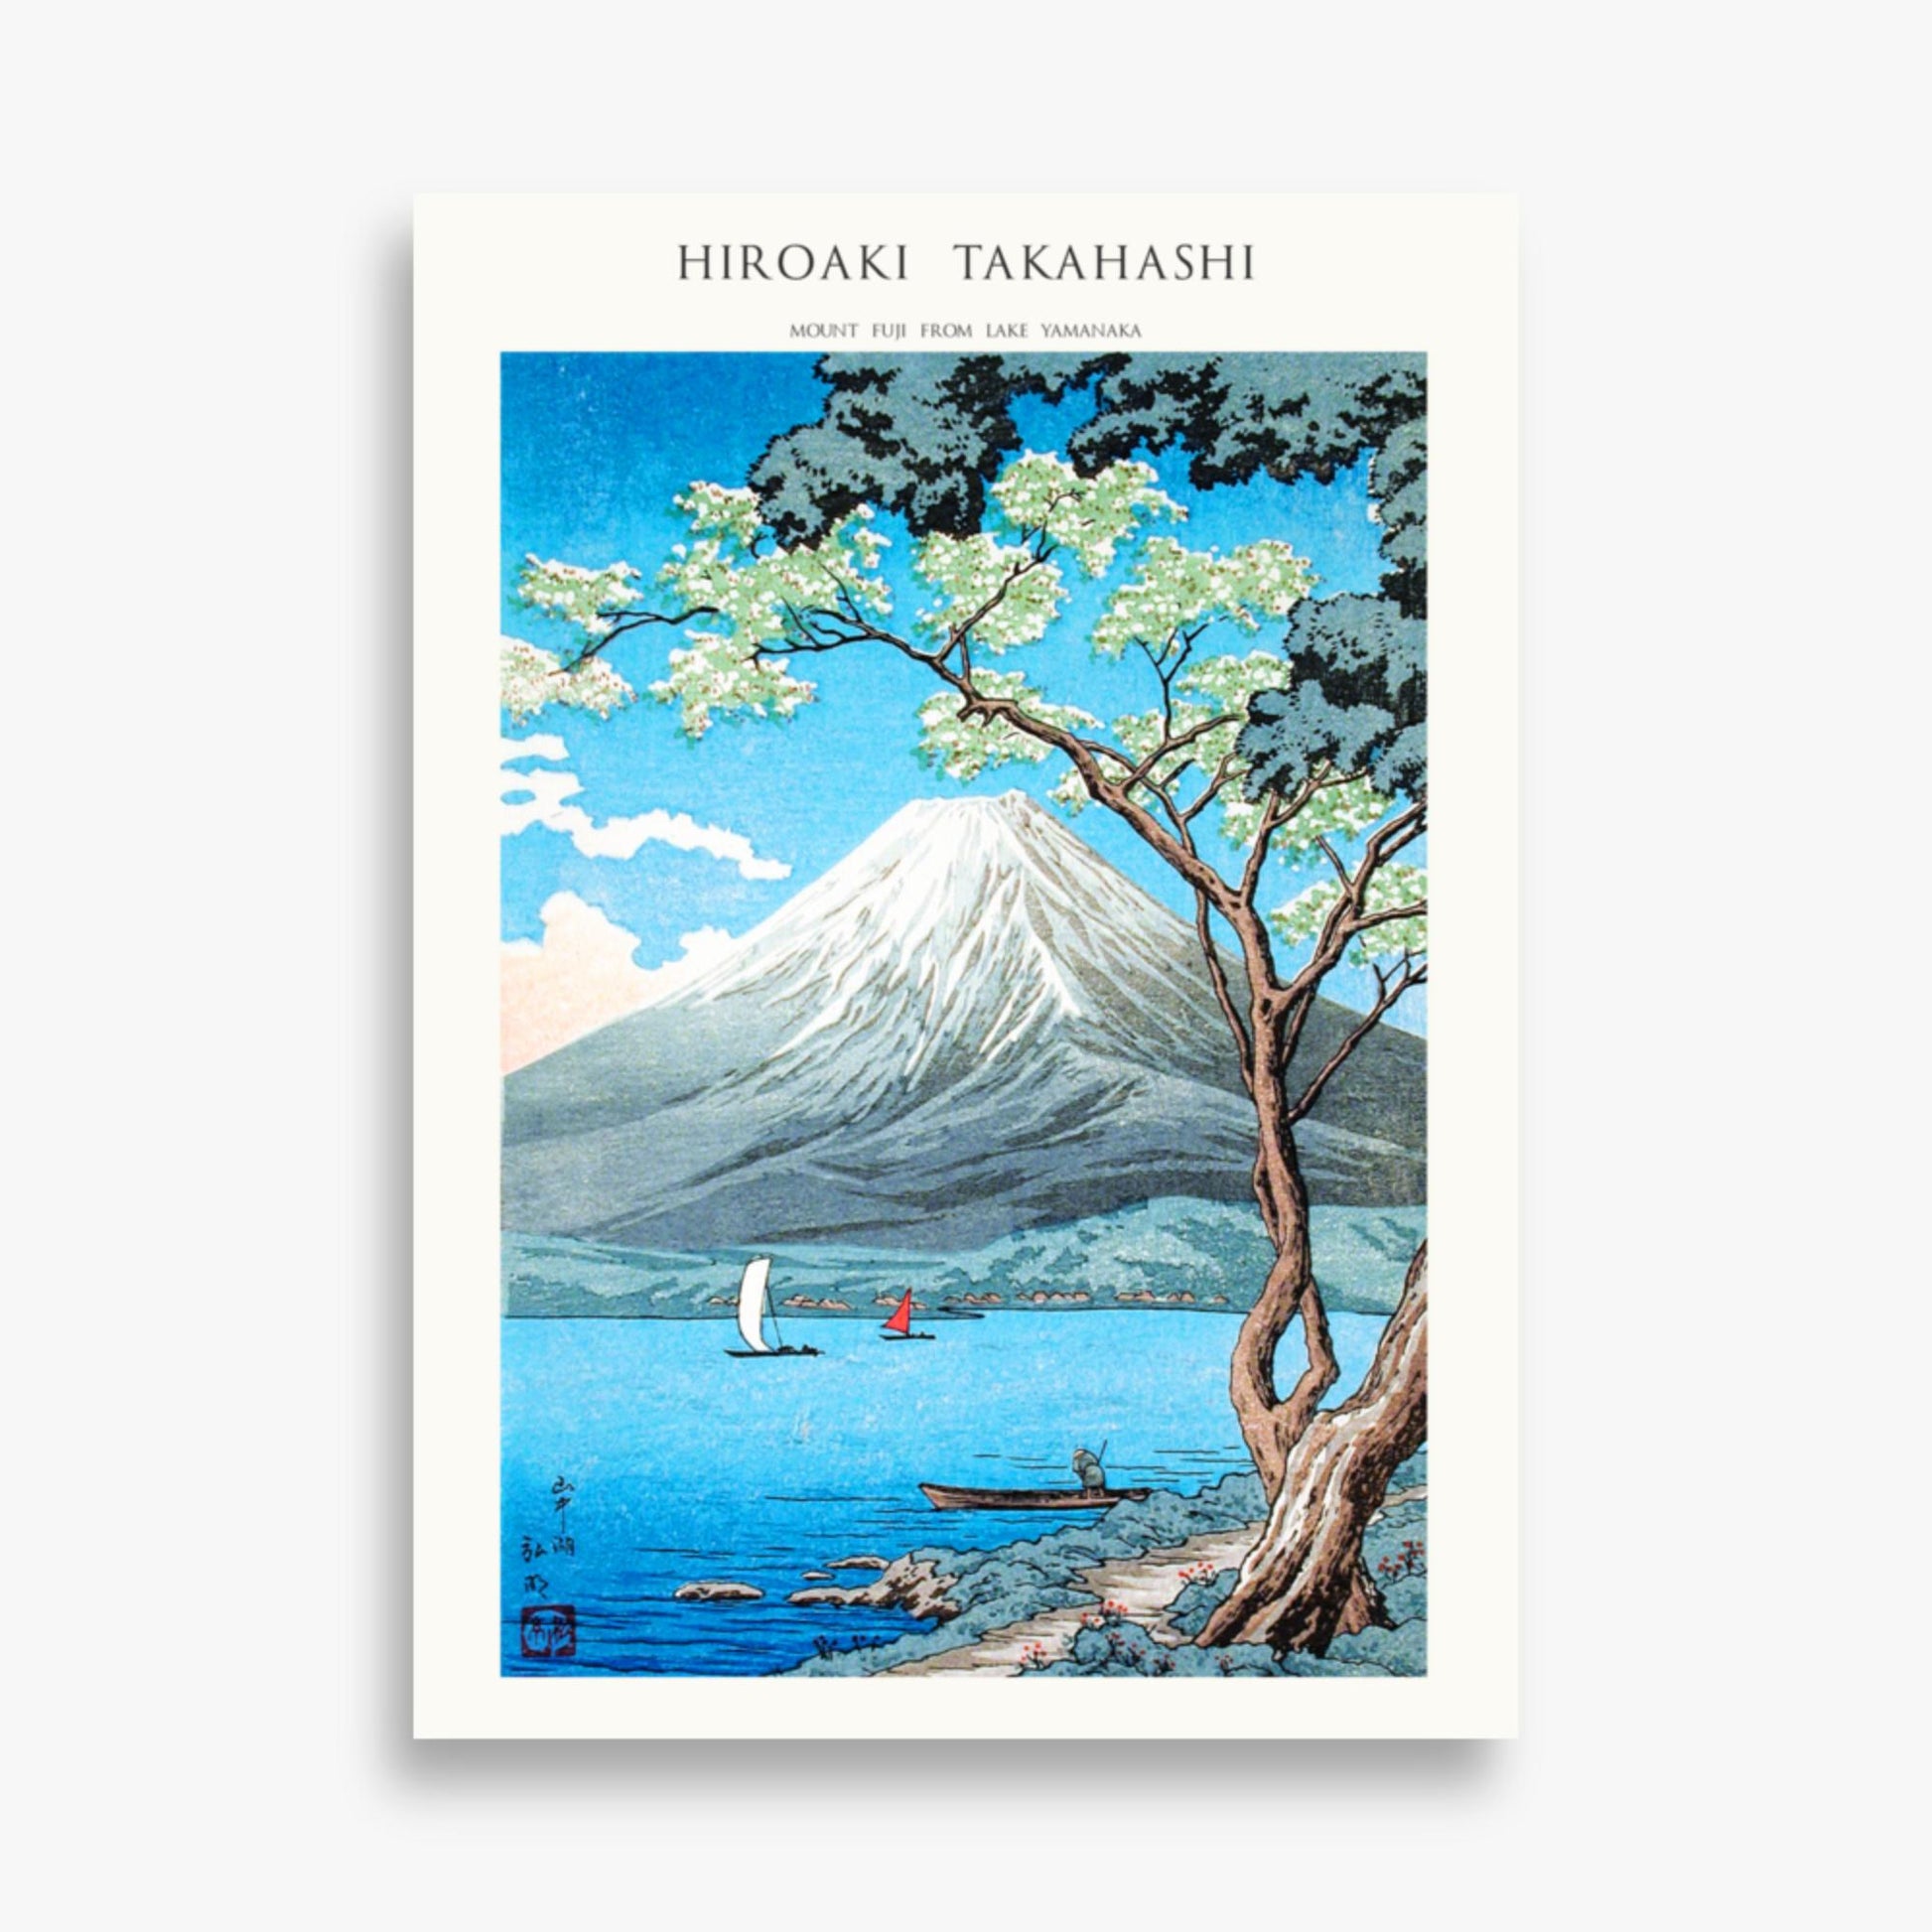 Hiroaki Takahashi - Mount Fuji from Lake Yamanaka - Decoration 50x70 cm Poster